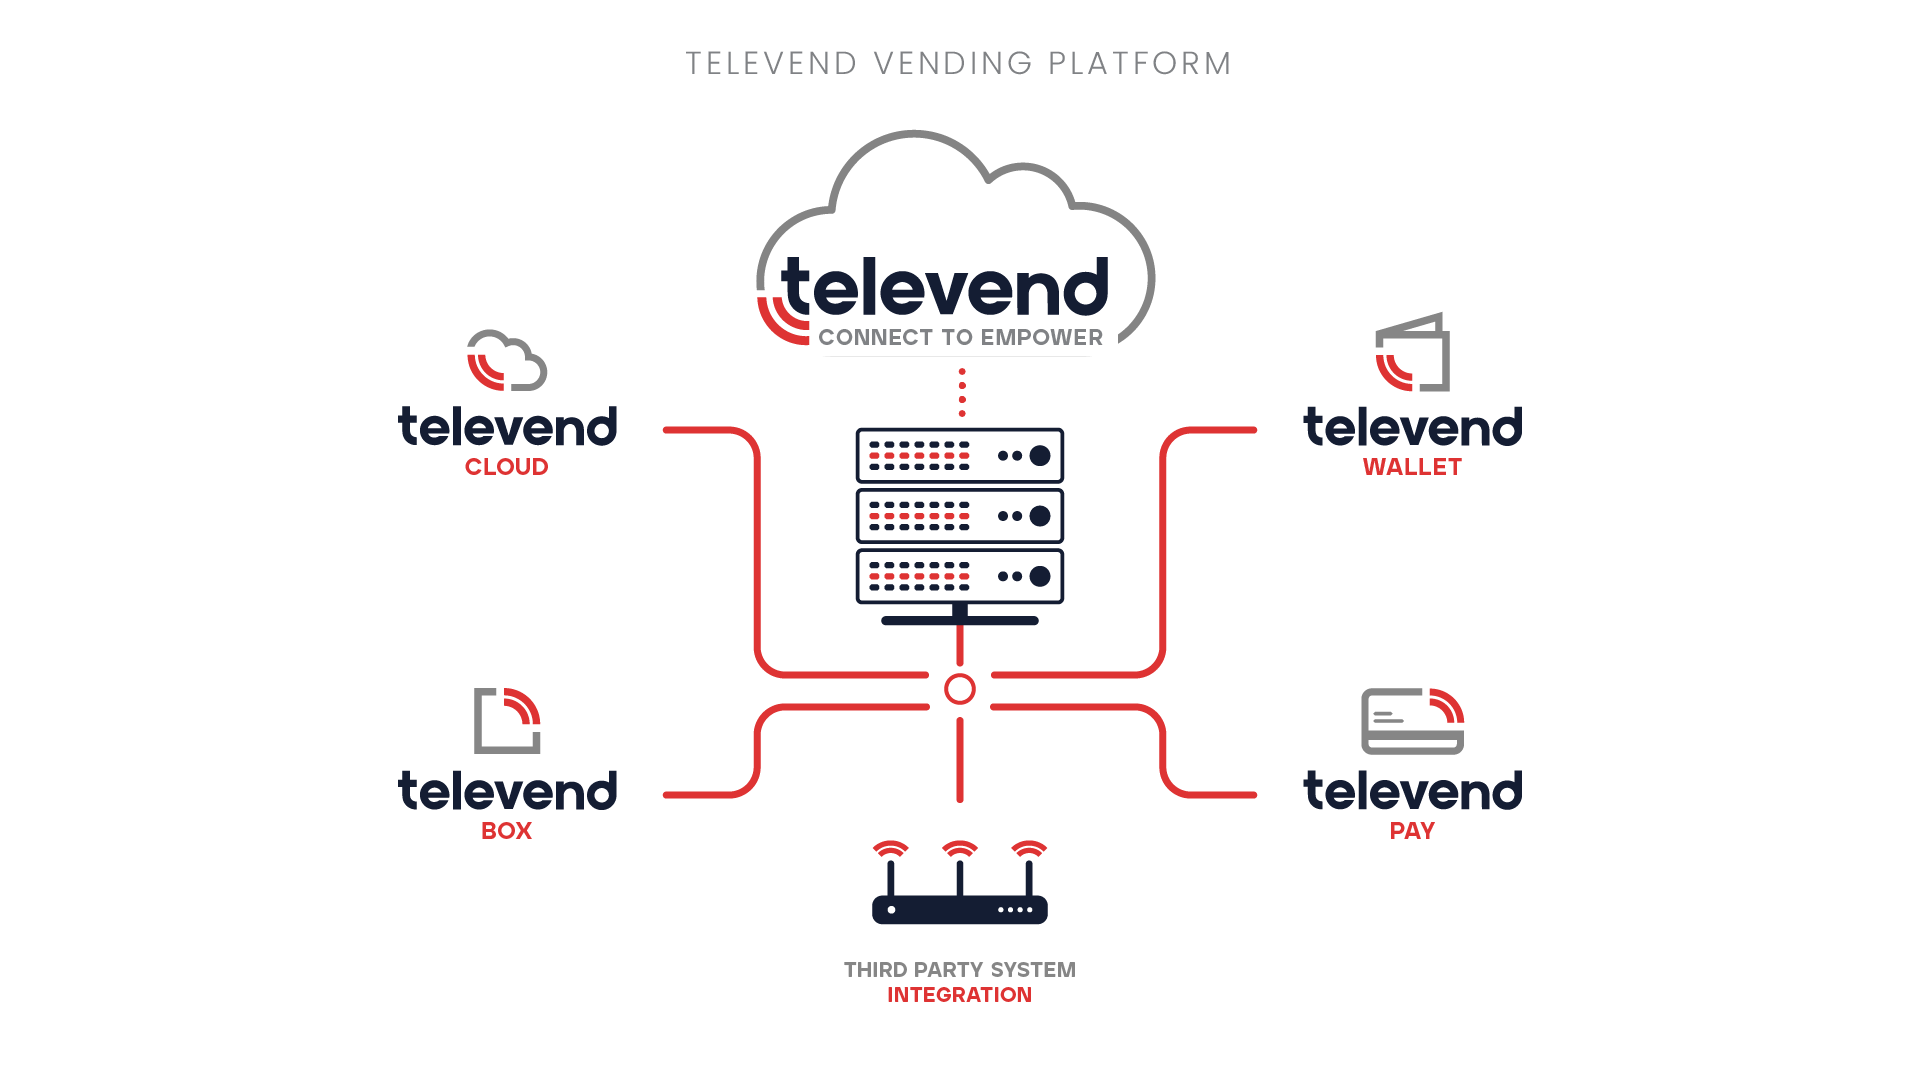 Televend Vending Plattform